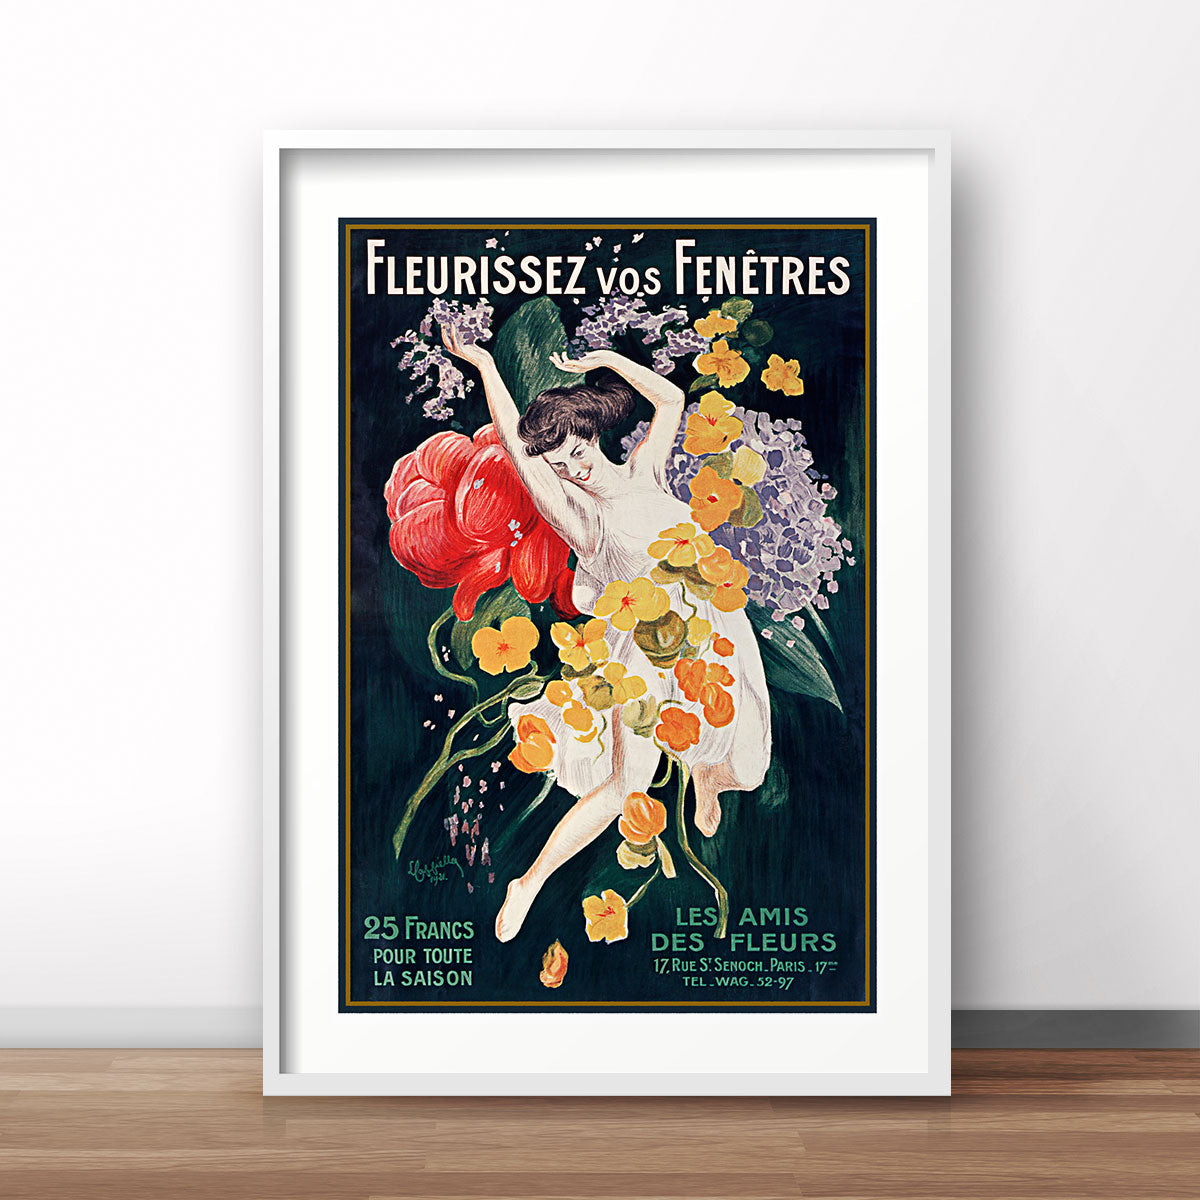 Les Amis Des Fleurs retro vintage advertising poster print from Places We Luv